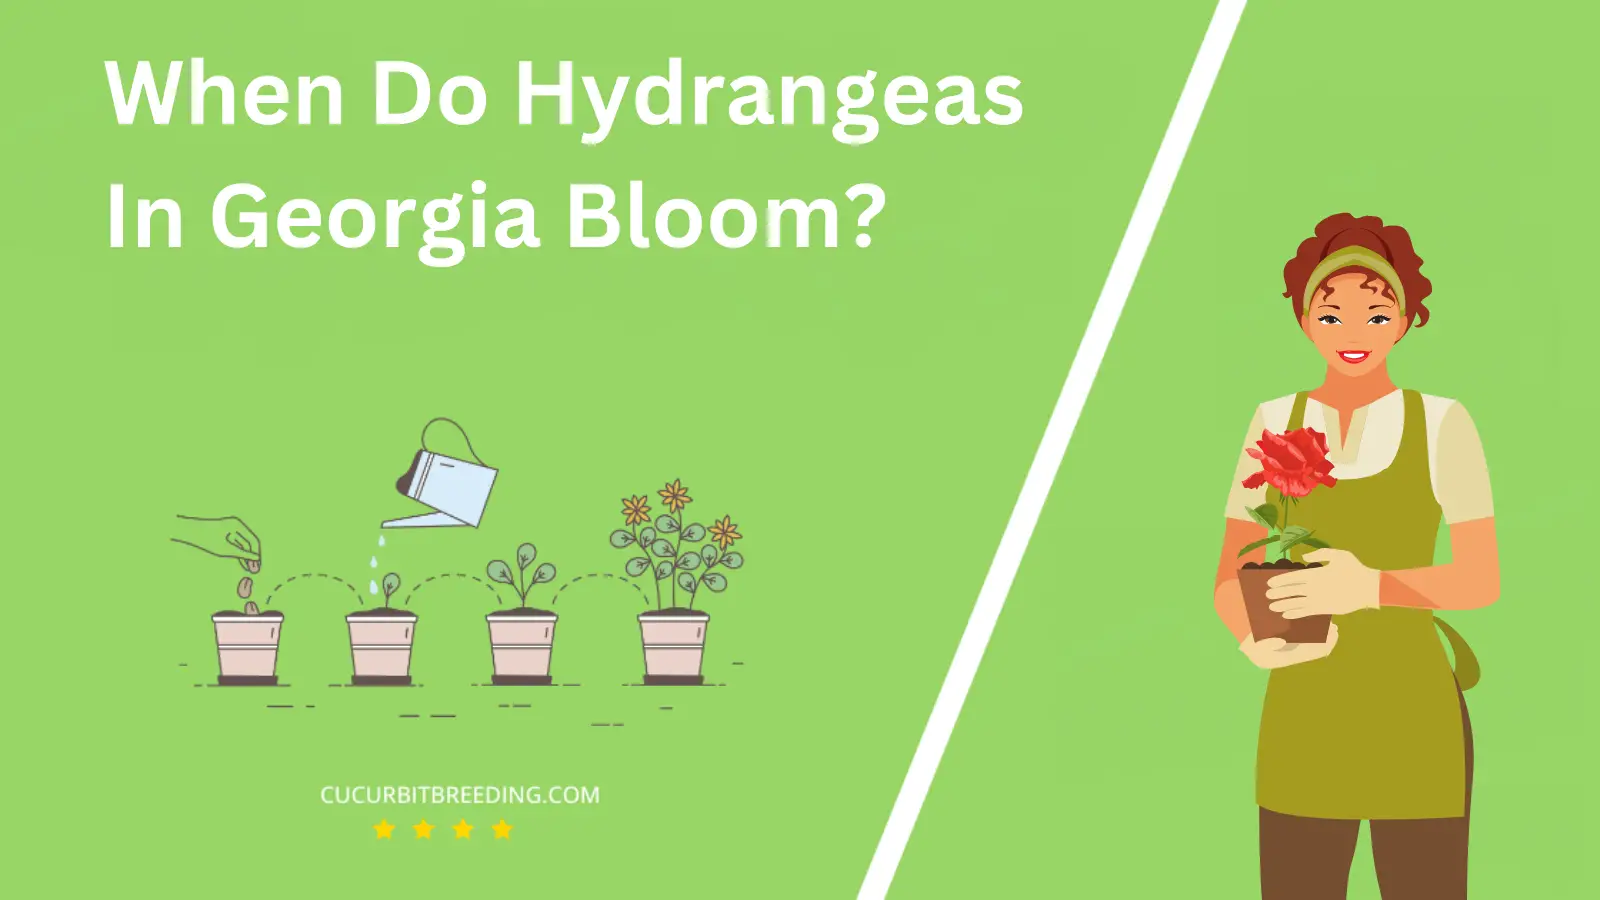 When Do Hydrangeas In Georgia Bloom?